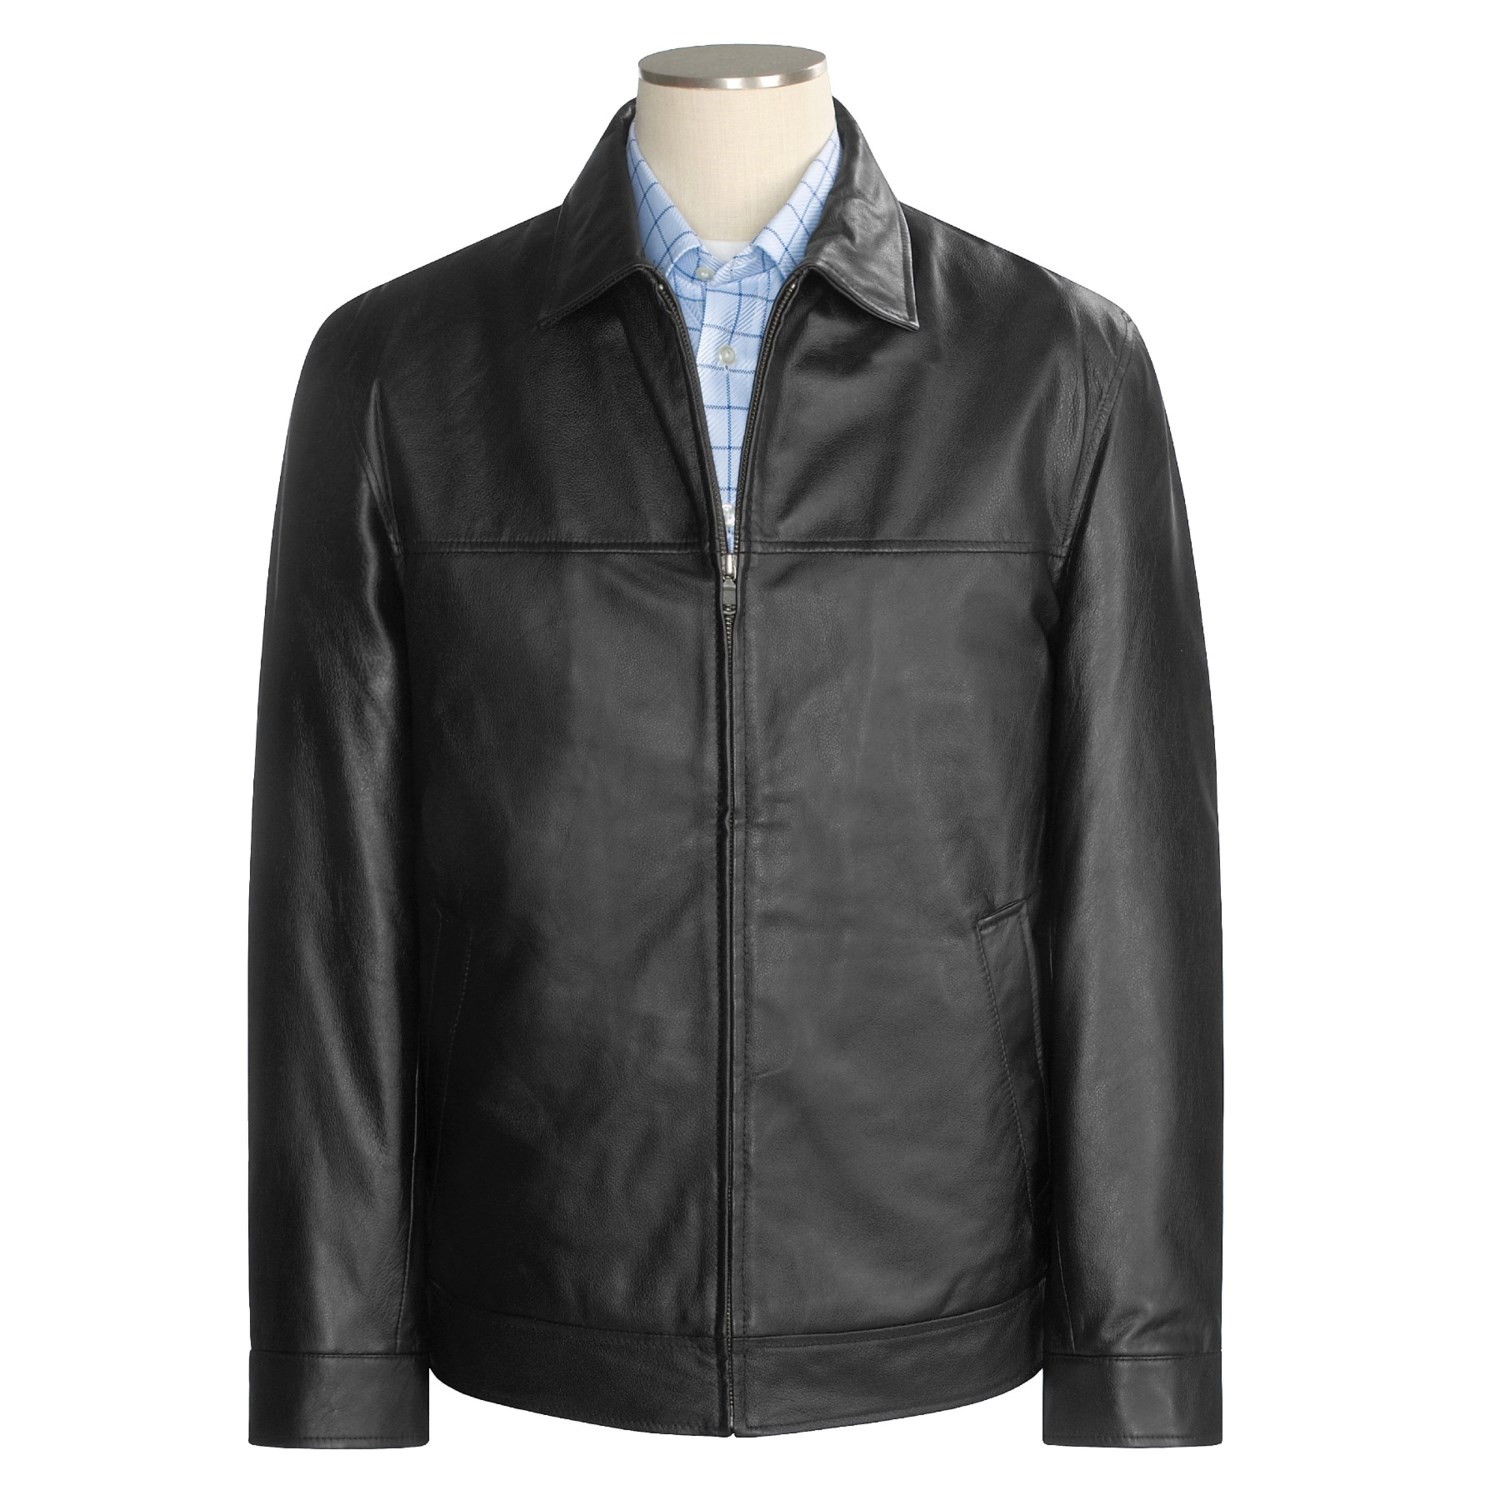 Joseph Abboud Mediterranean Jacket (For Men) 49883 - Save 50%